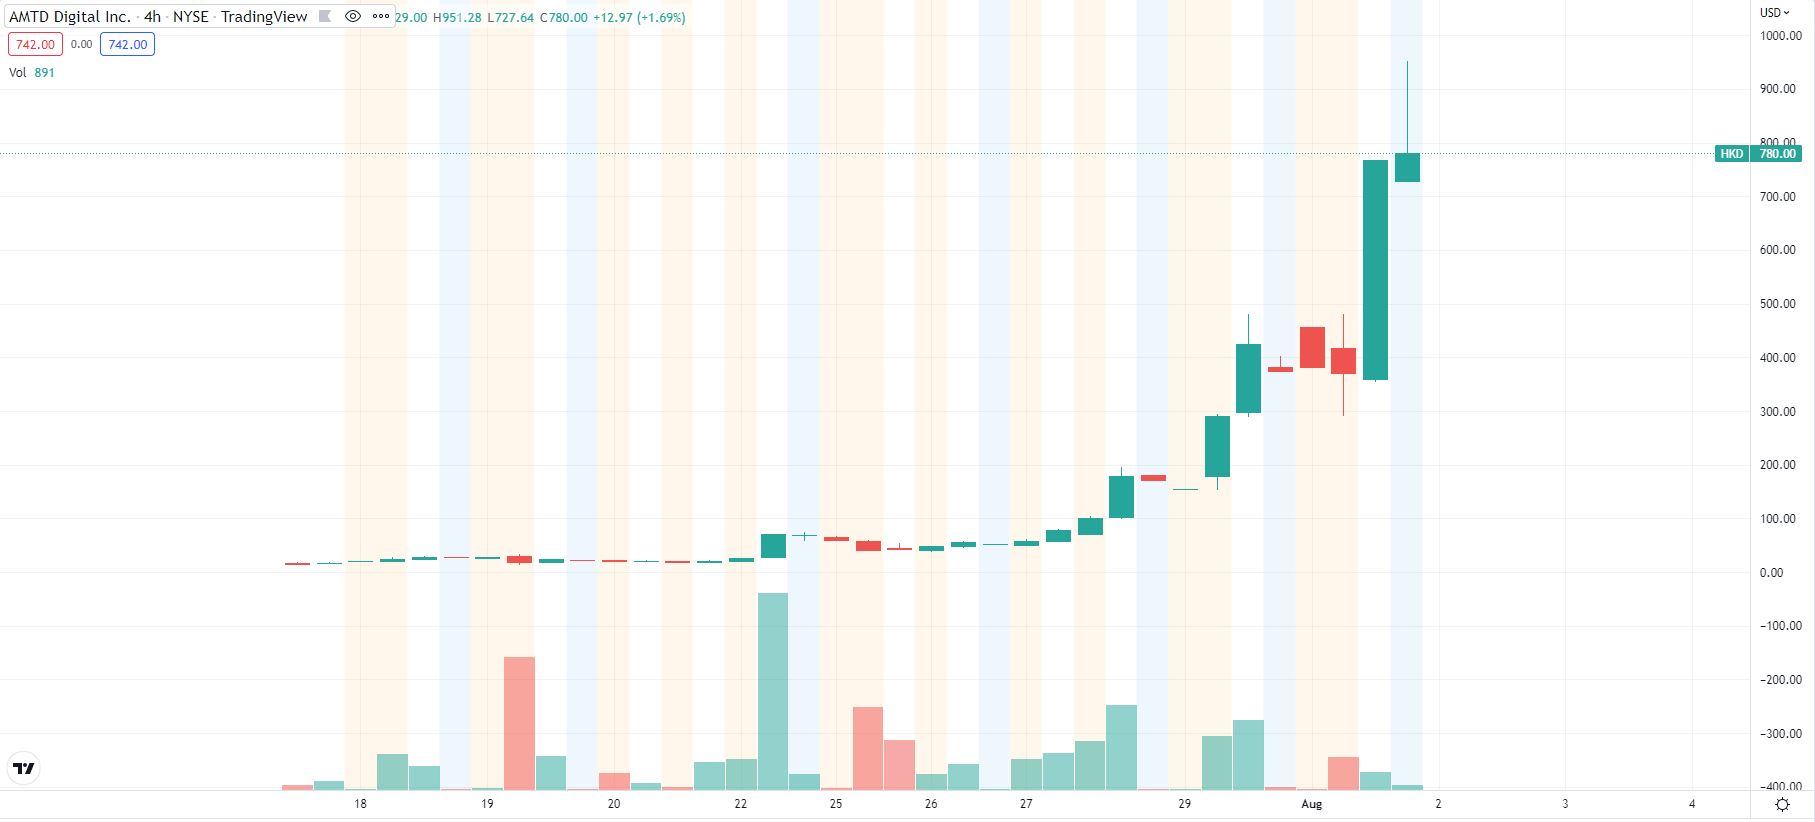 AMTD Digital (HKD) stock skyrockets over 100%, no idea why